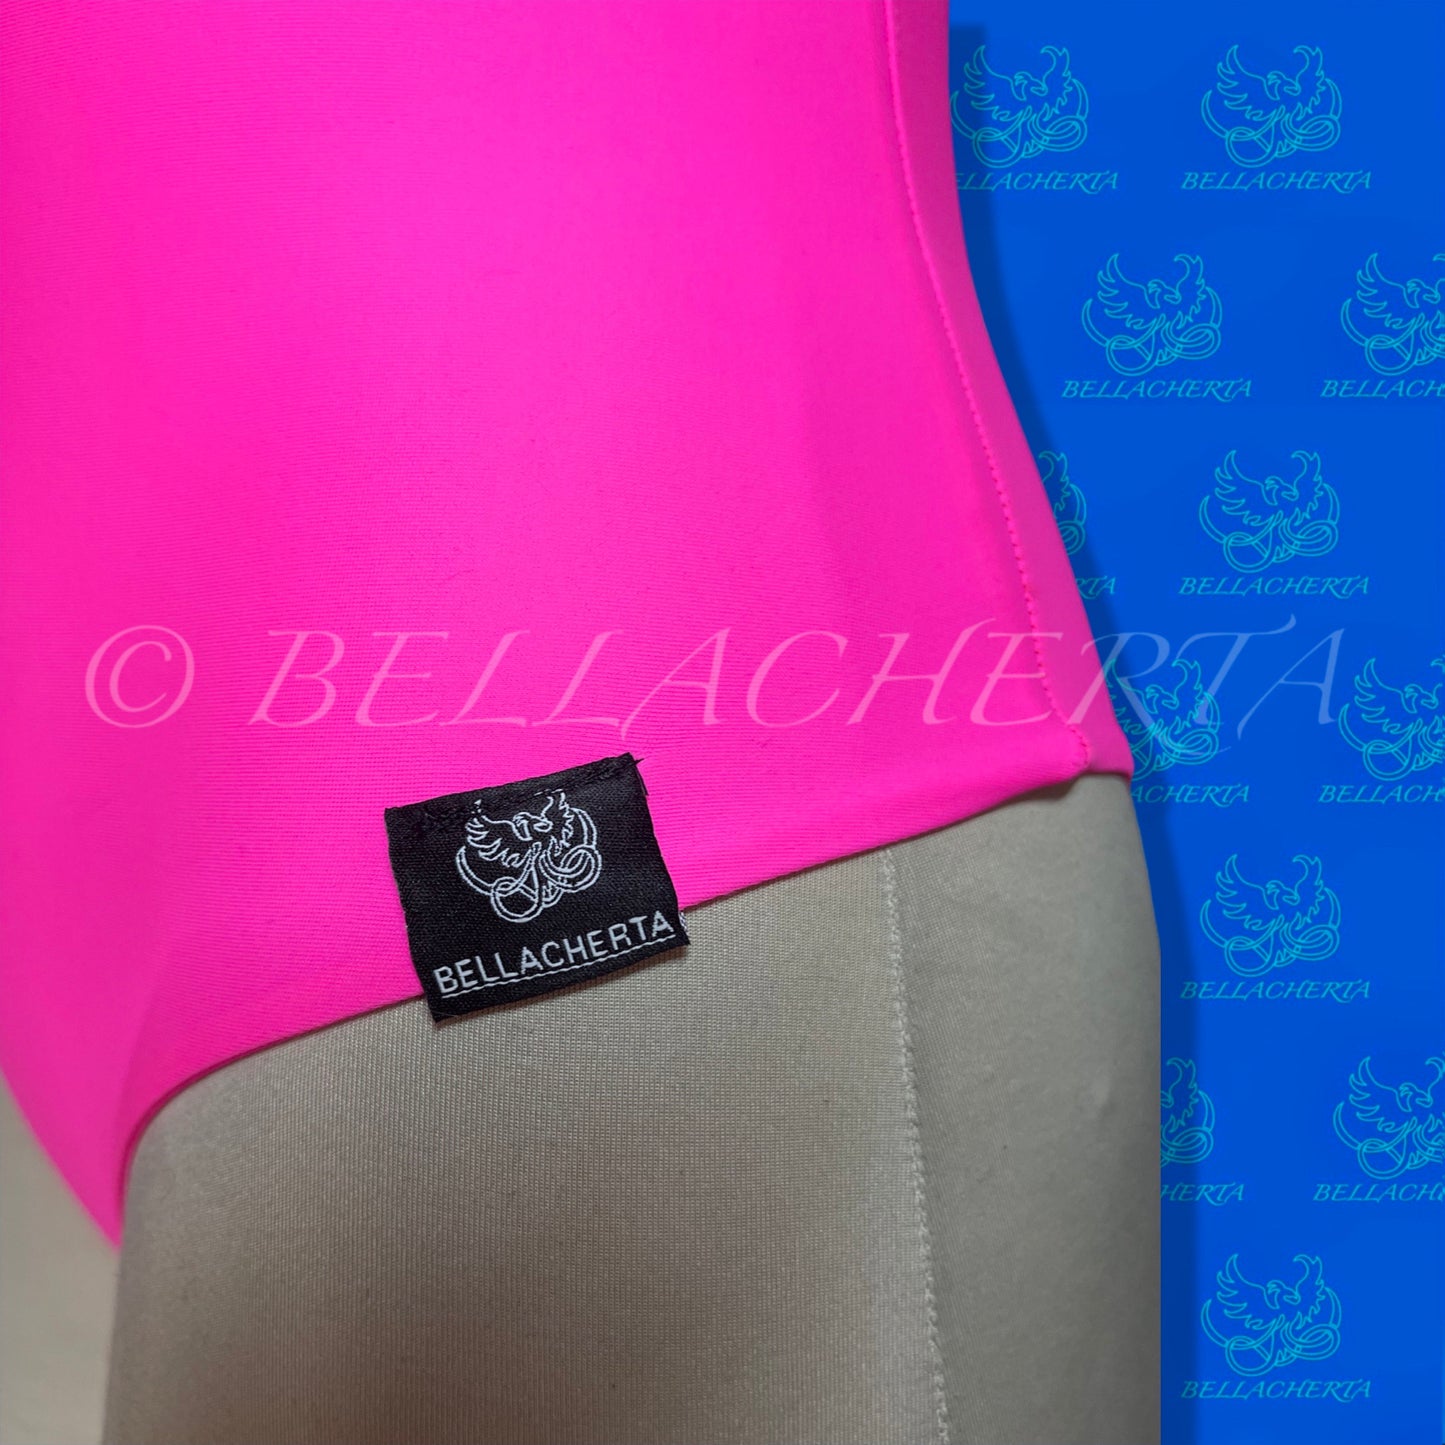 Neon-bright One-piece Swimsuit